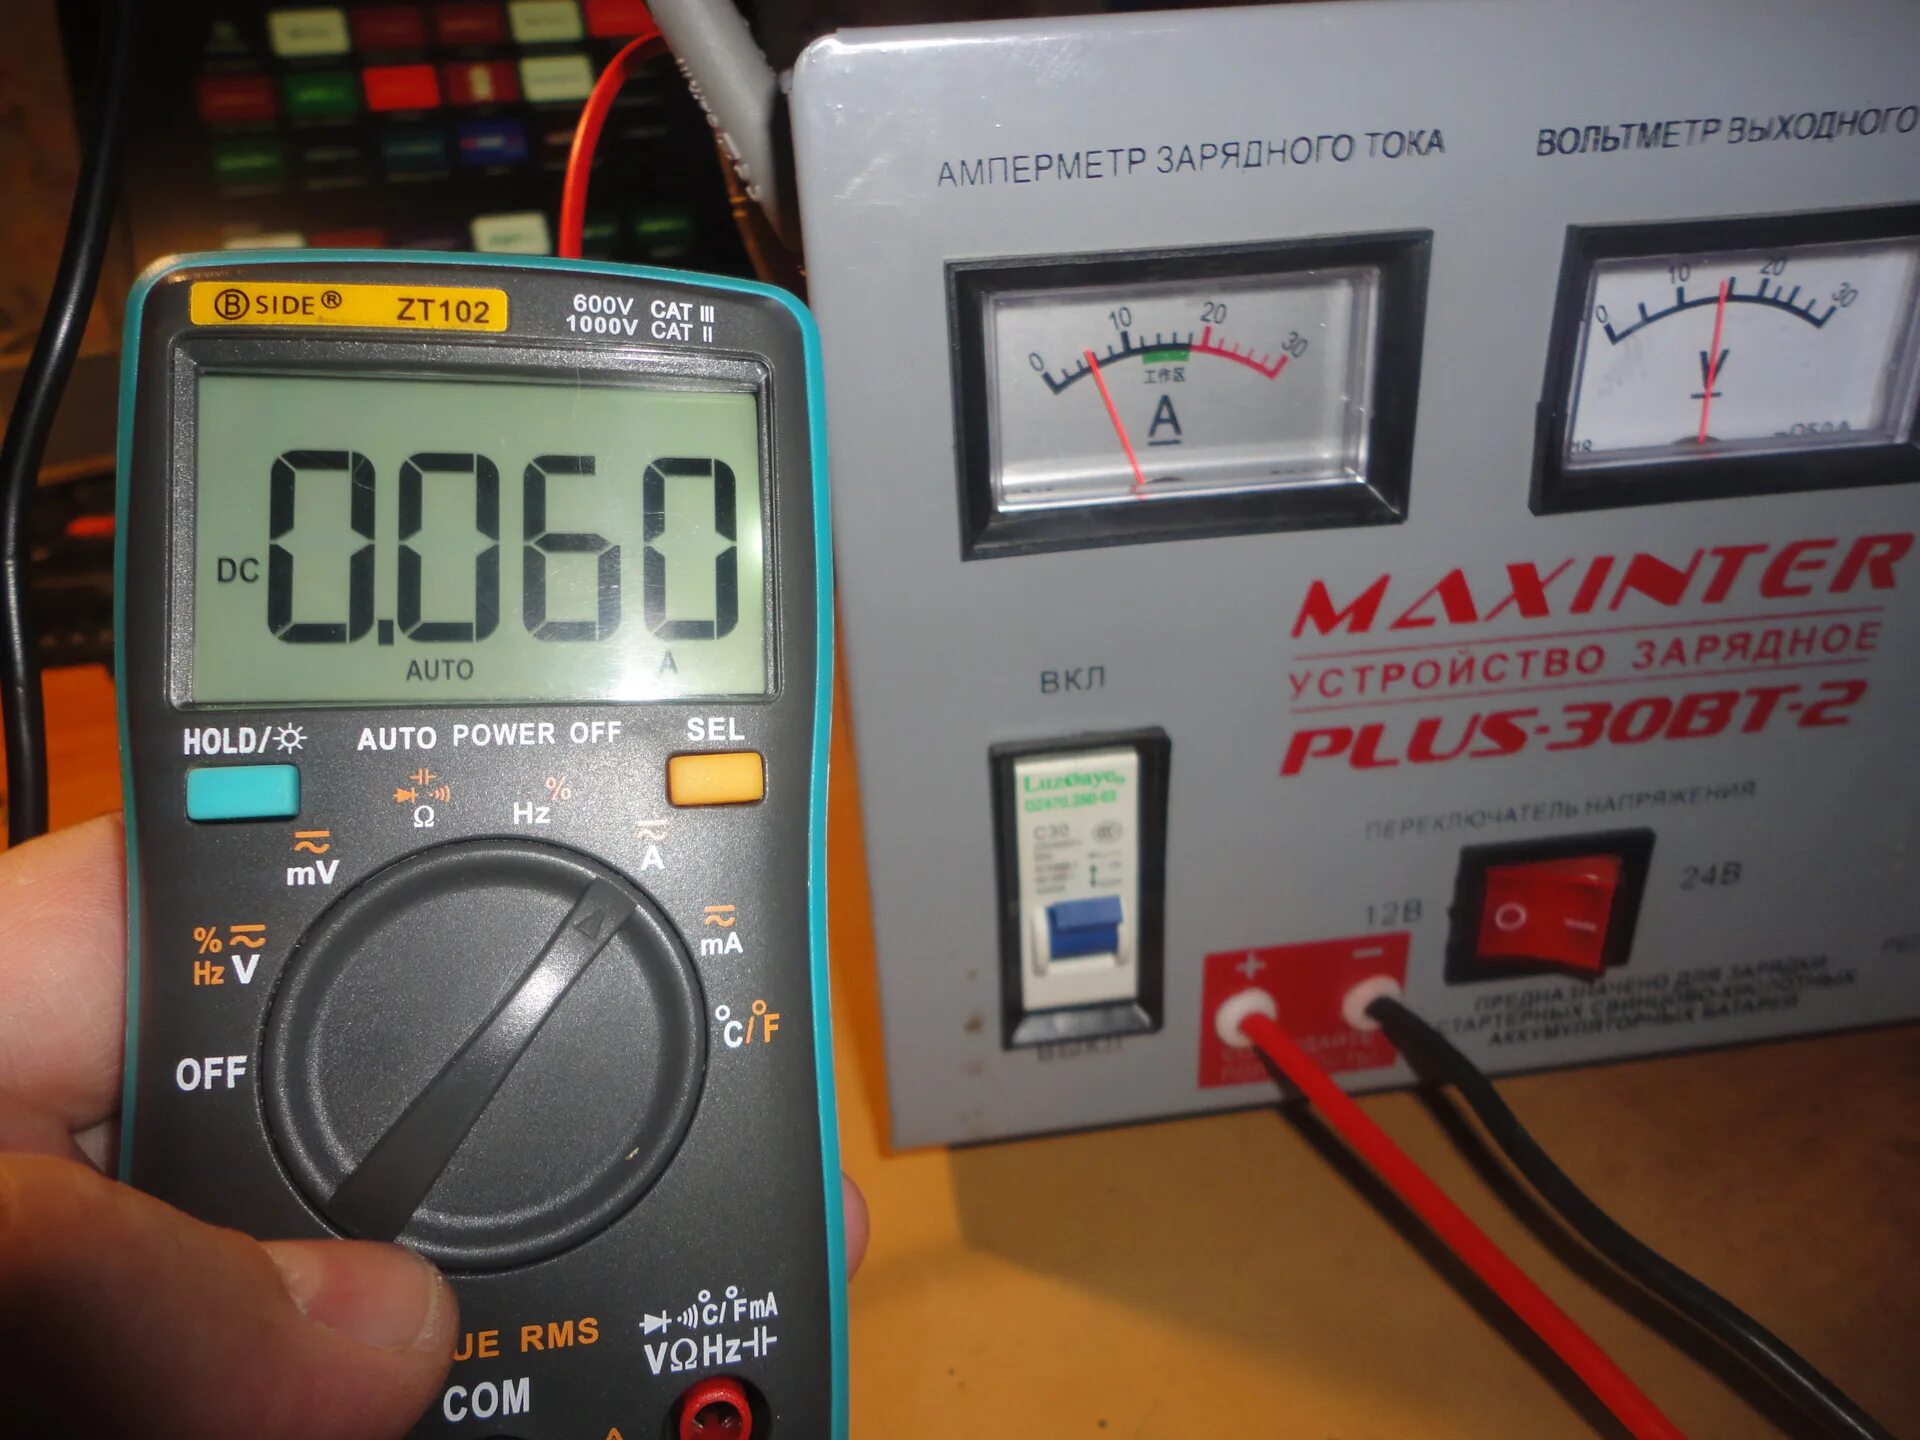 Maxinter Plus-30bt-2. Амперметр зарядного тока Maxinter Plus 30. Зарядное устройство Maxinter Plus-30 BT-2. Maxinter Plus-30 BT-2 Power, 12в/24в.